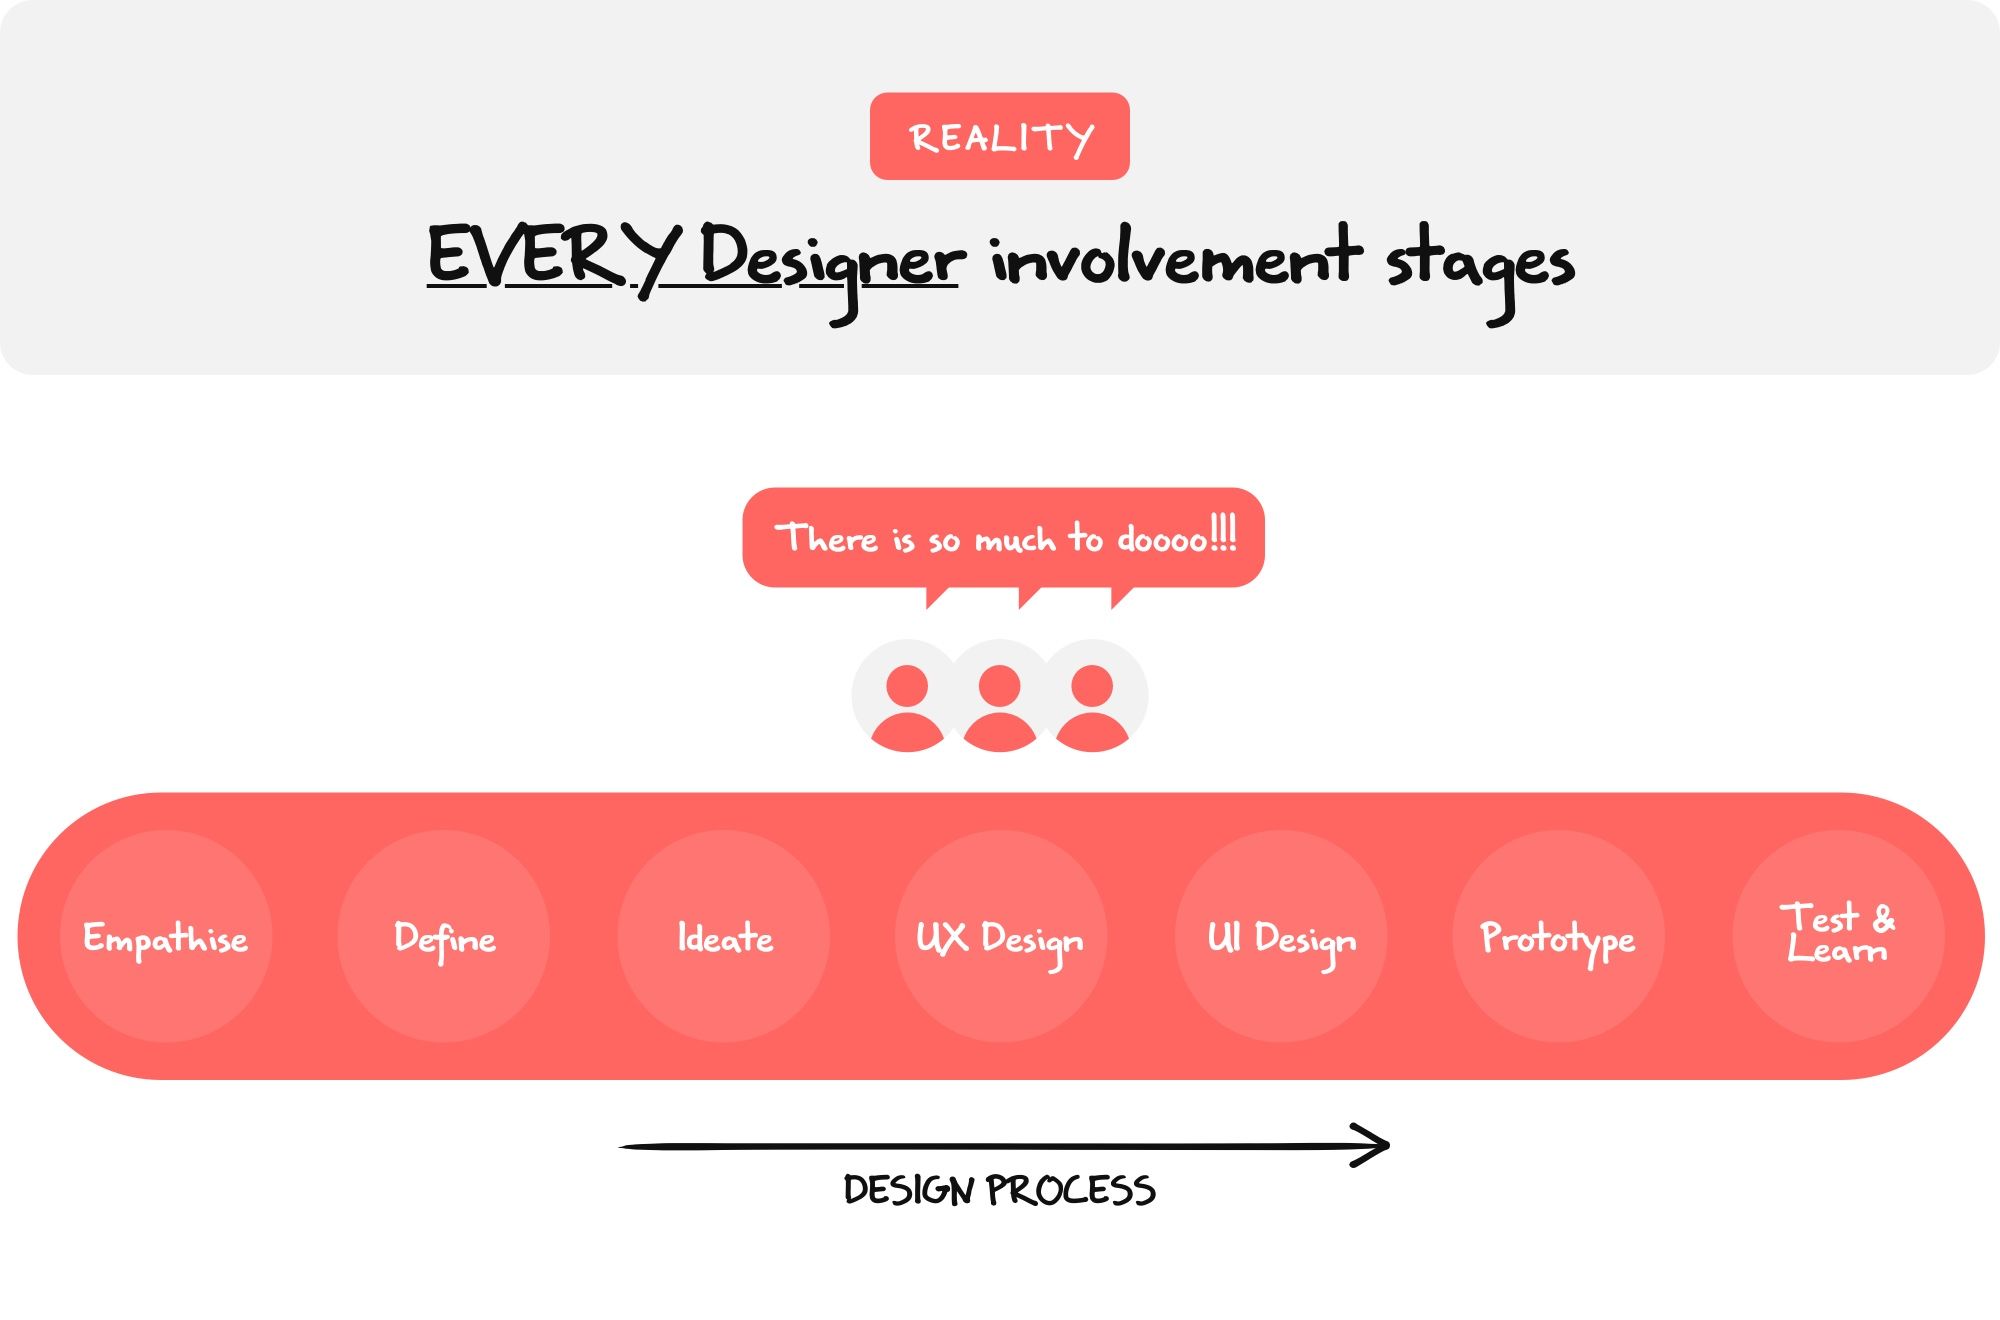 Every designer